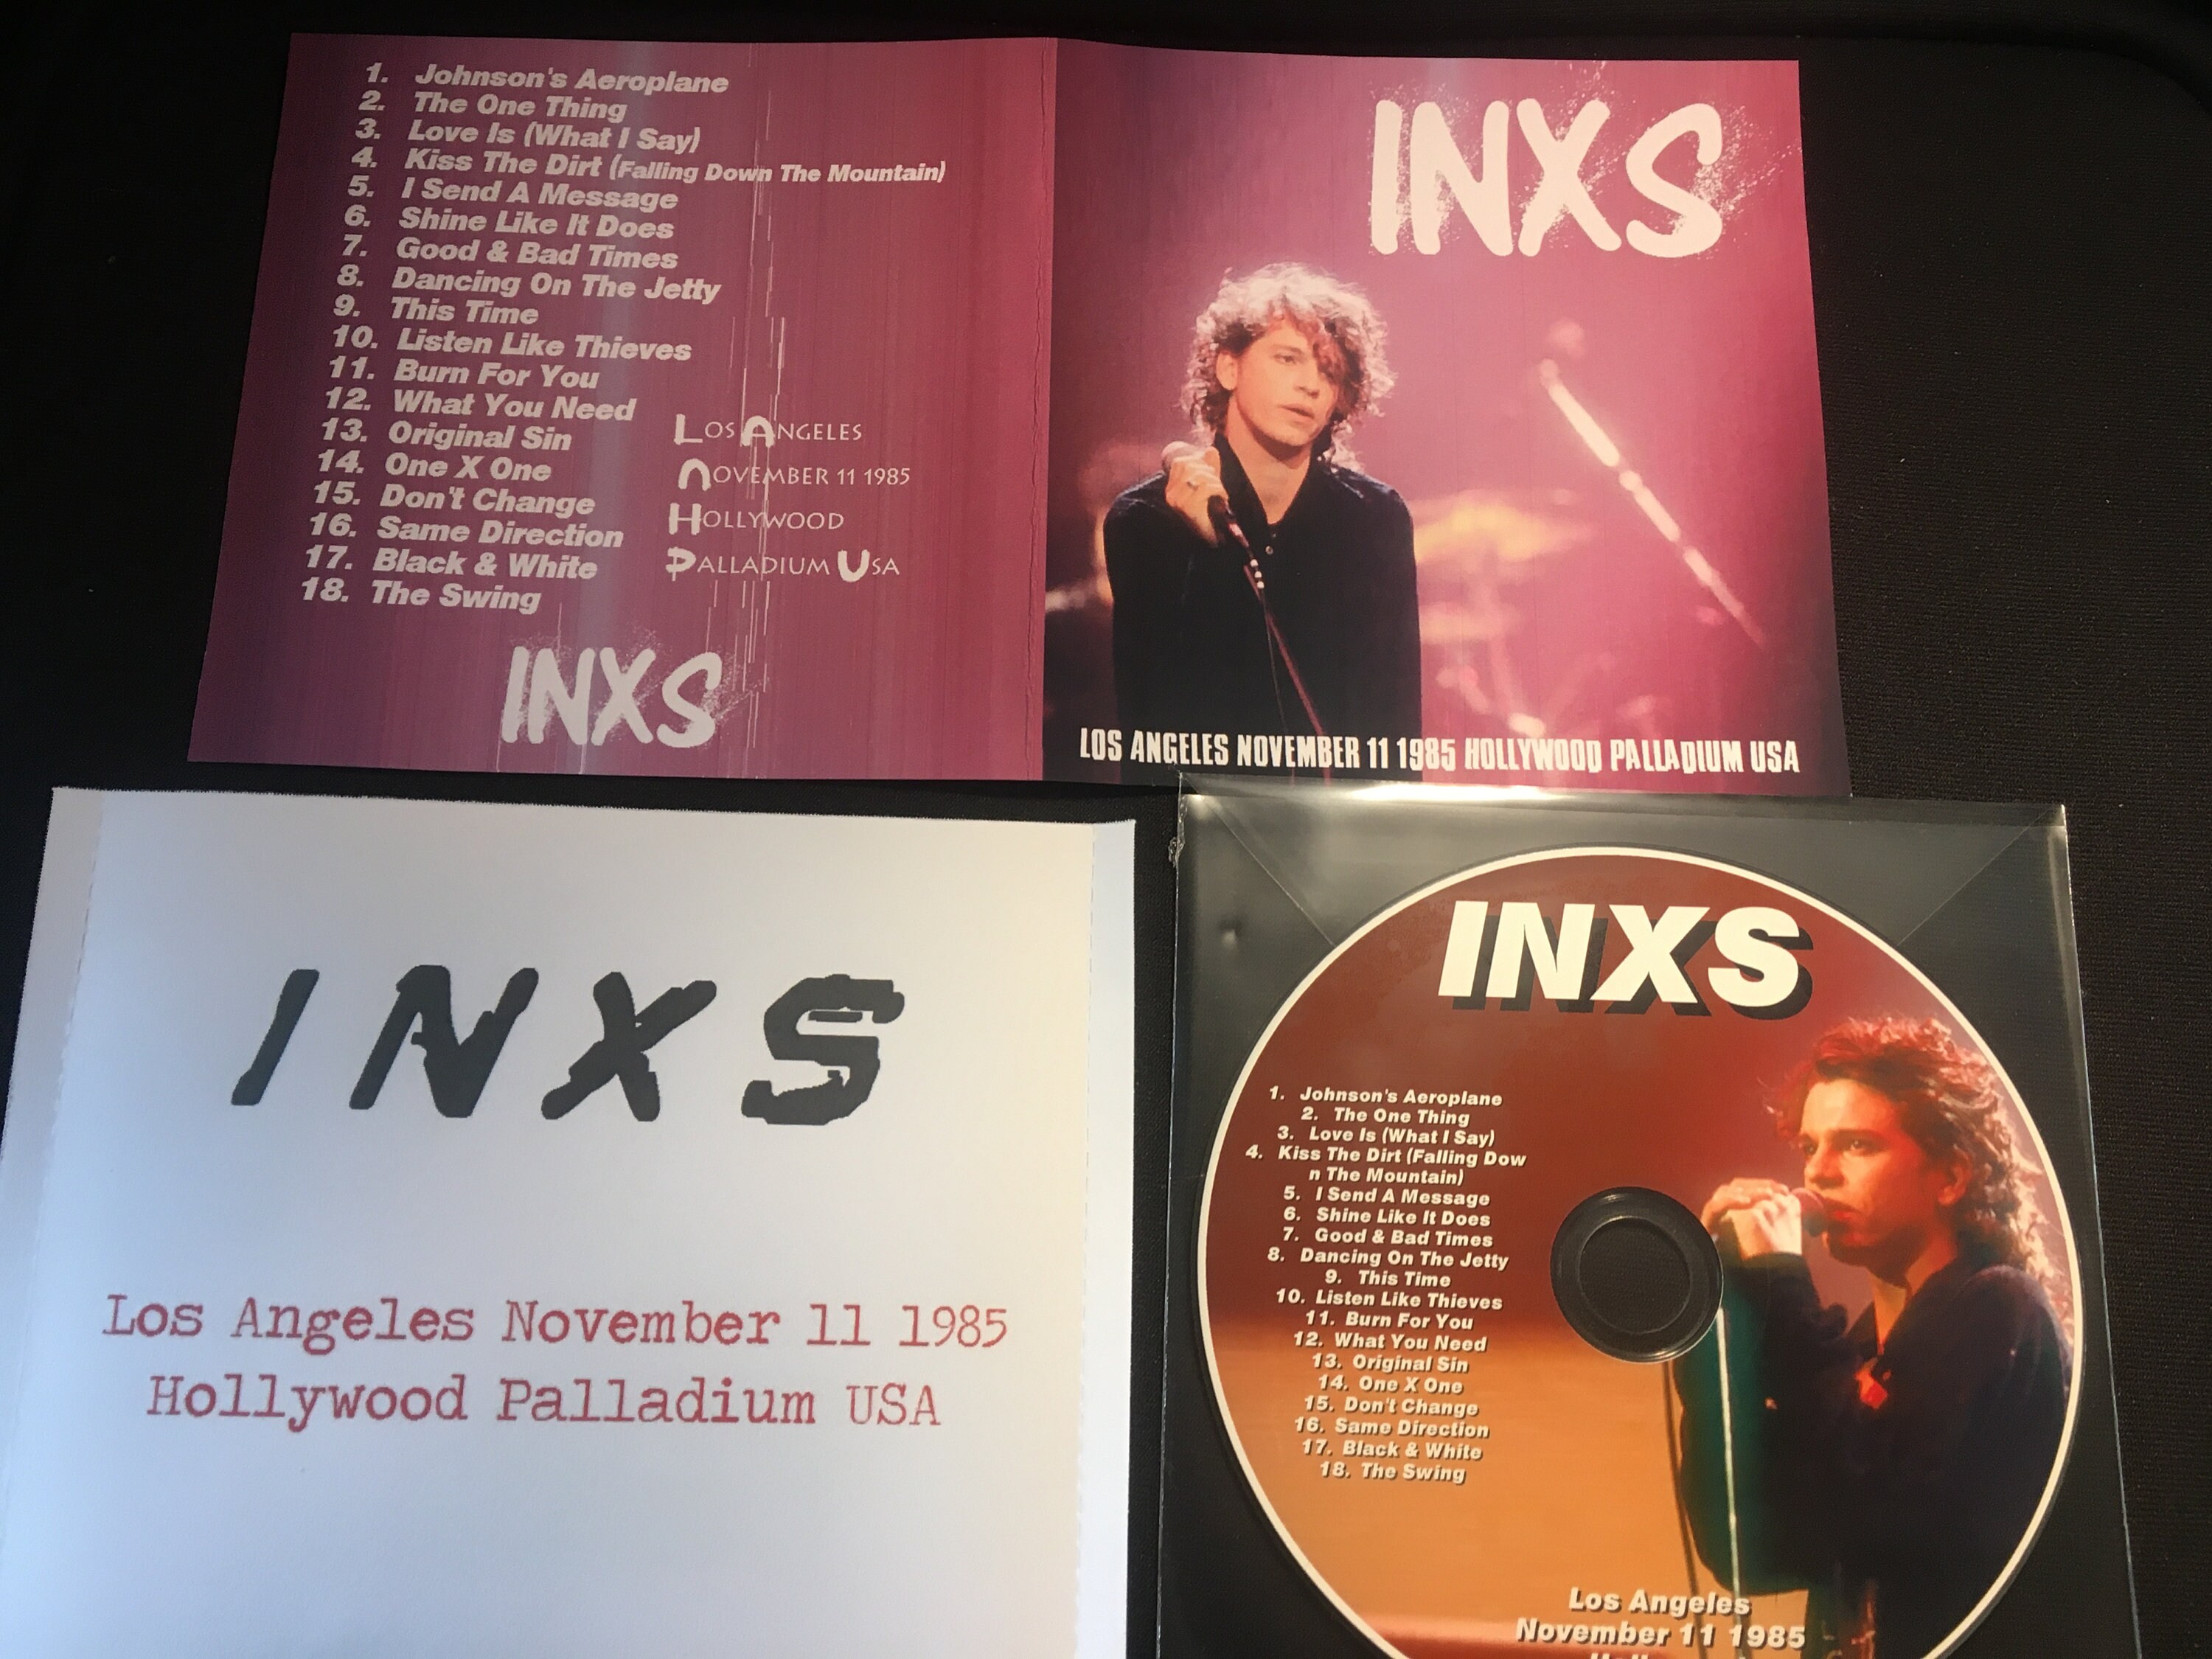 inxs 1985 tour